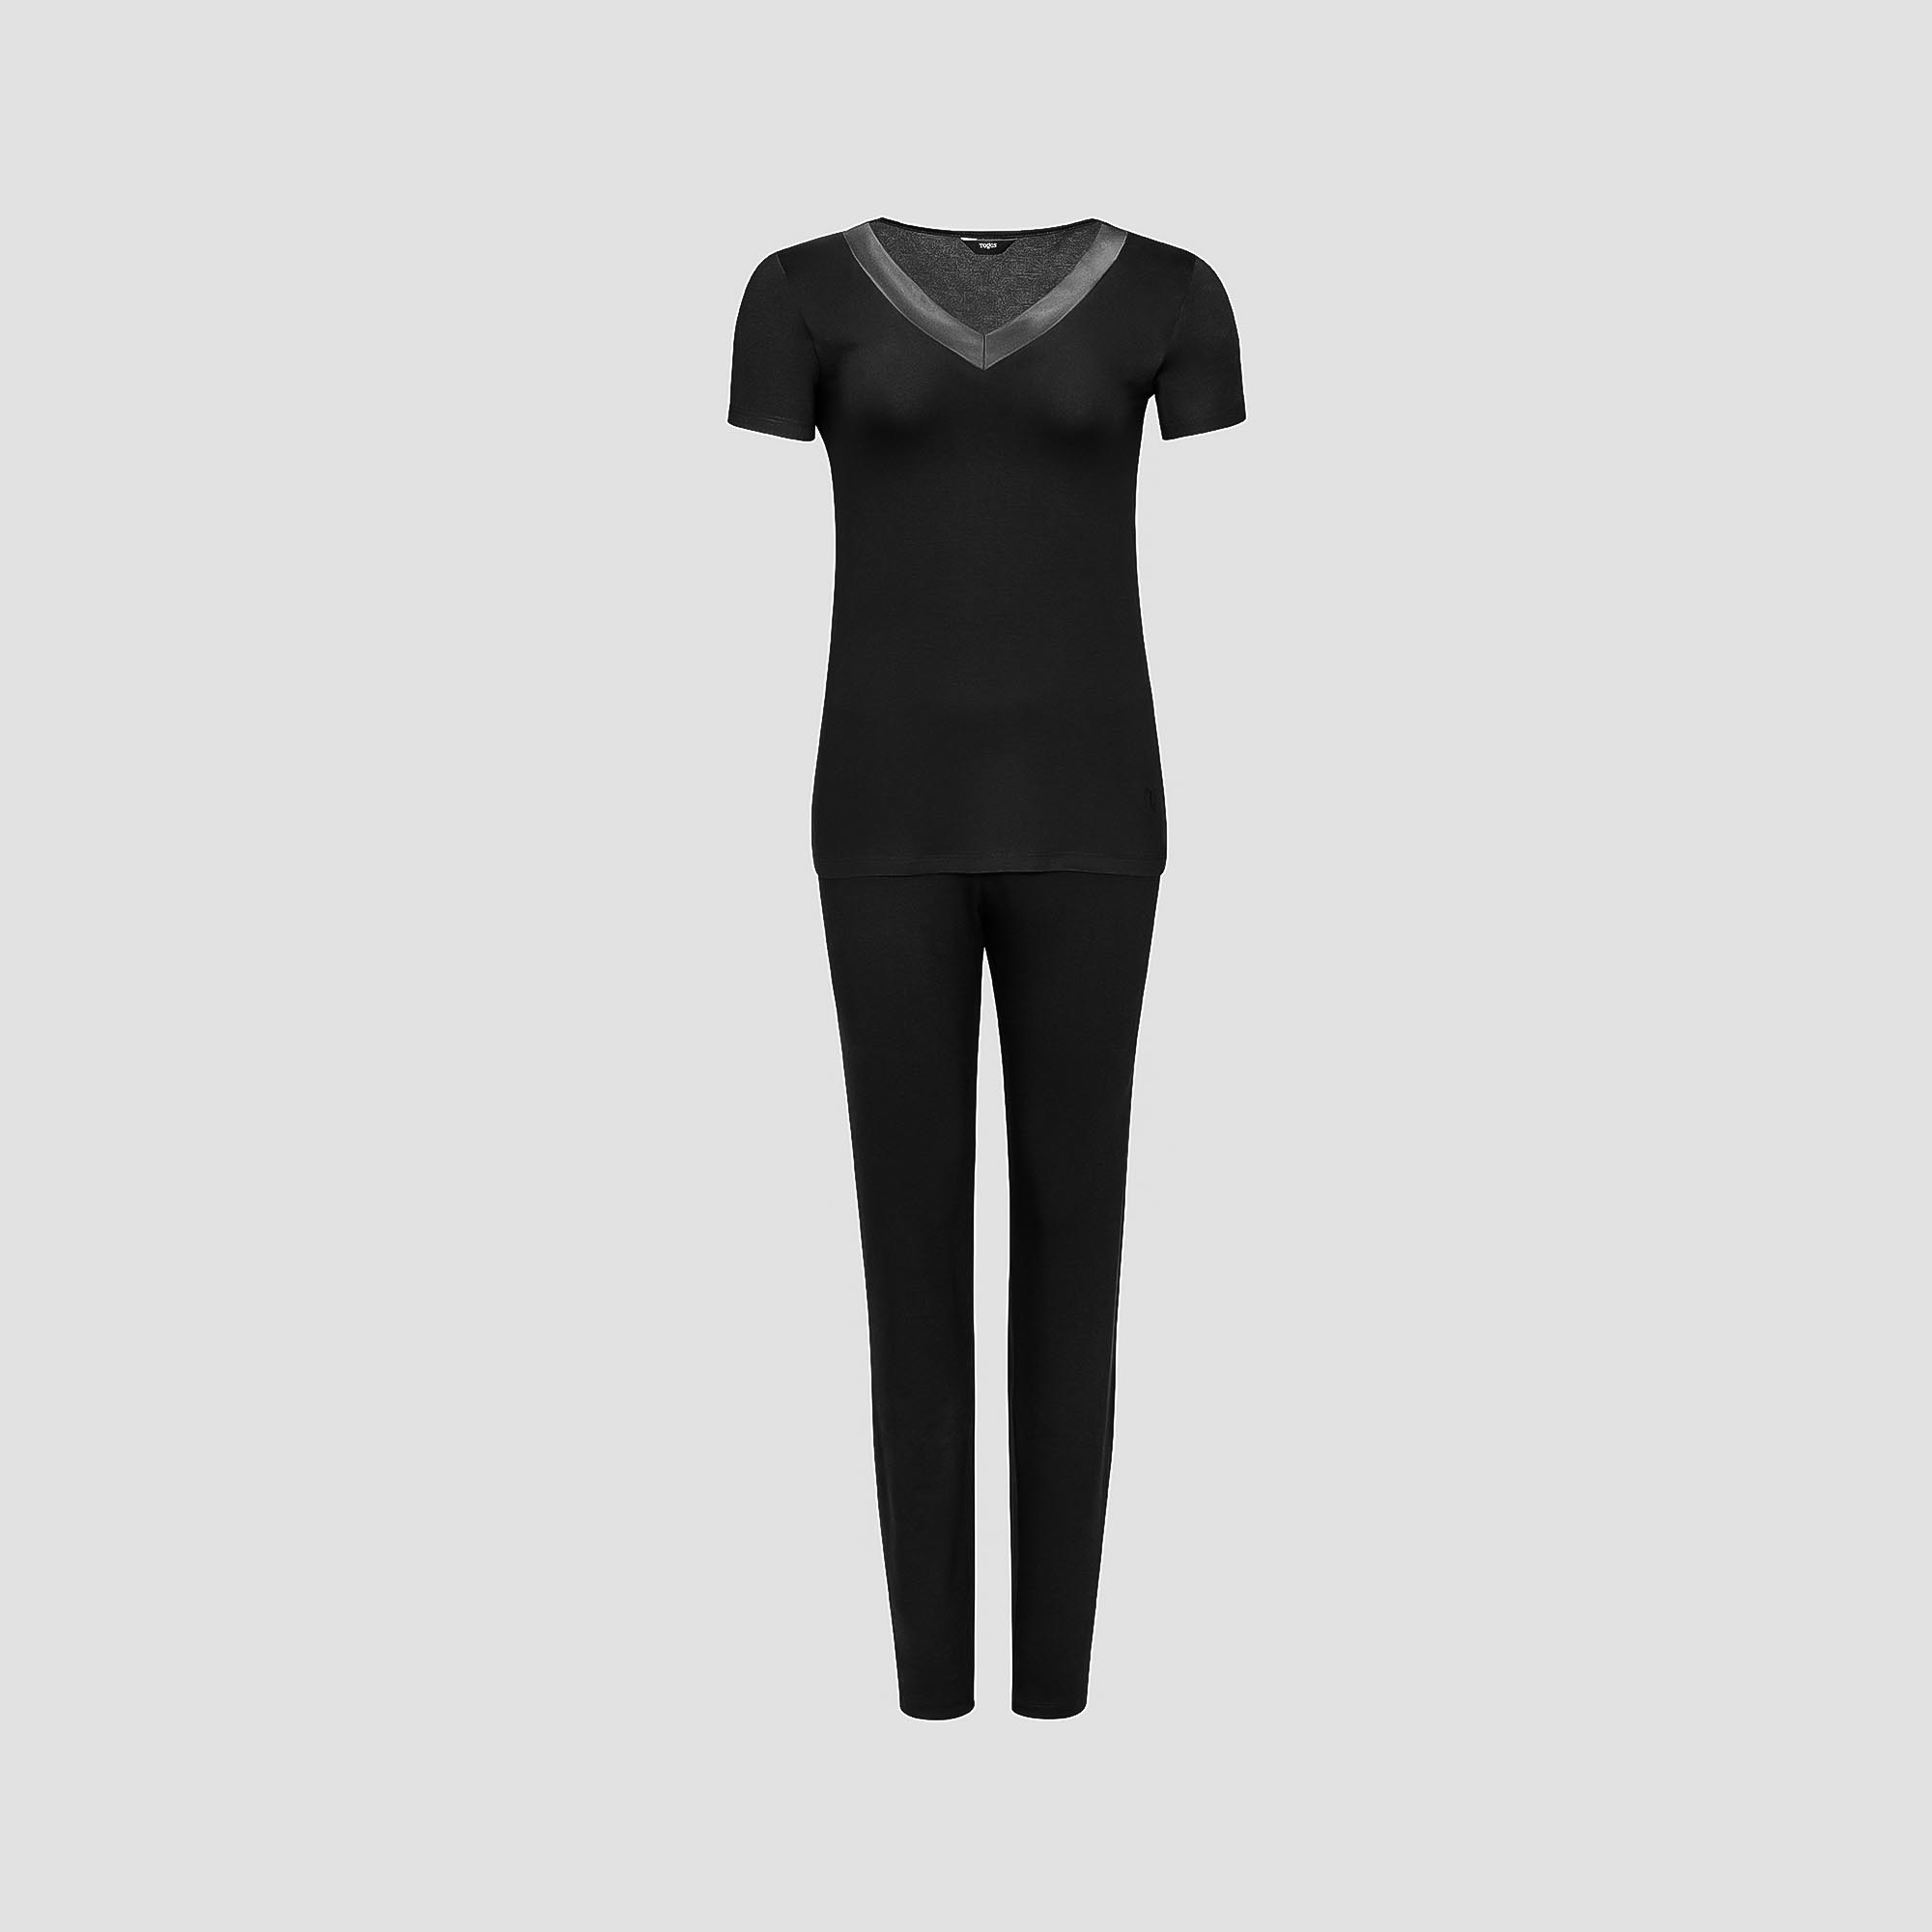 Пижама Togas Ингелла черная женская XXL(52) 2 предмета жен пижама арт 19 0681 темно серый р 56